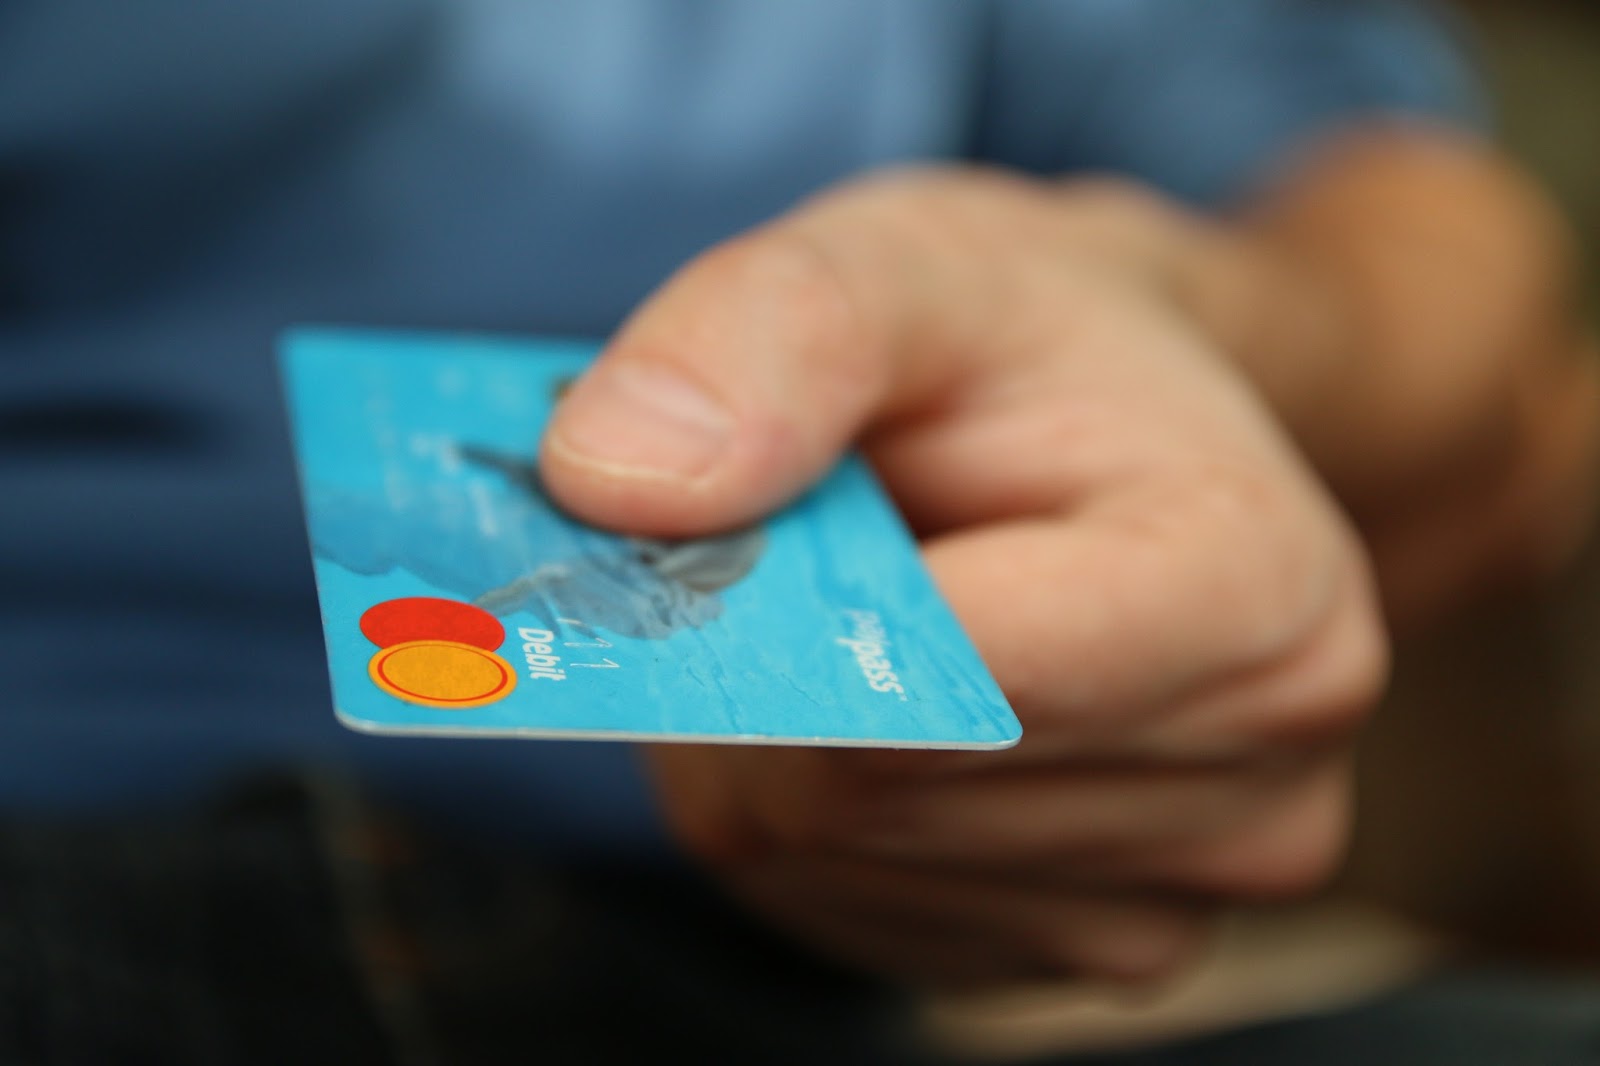 Debt management solutions - man's hand holding blue credit card